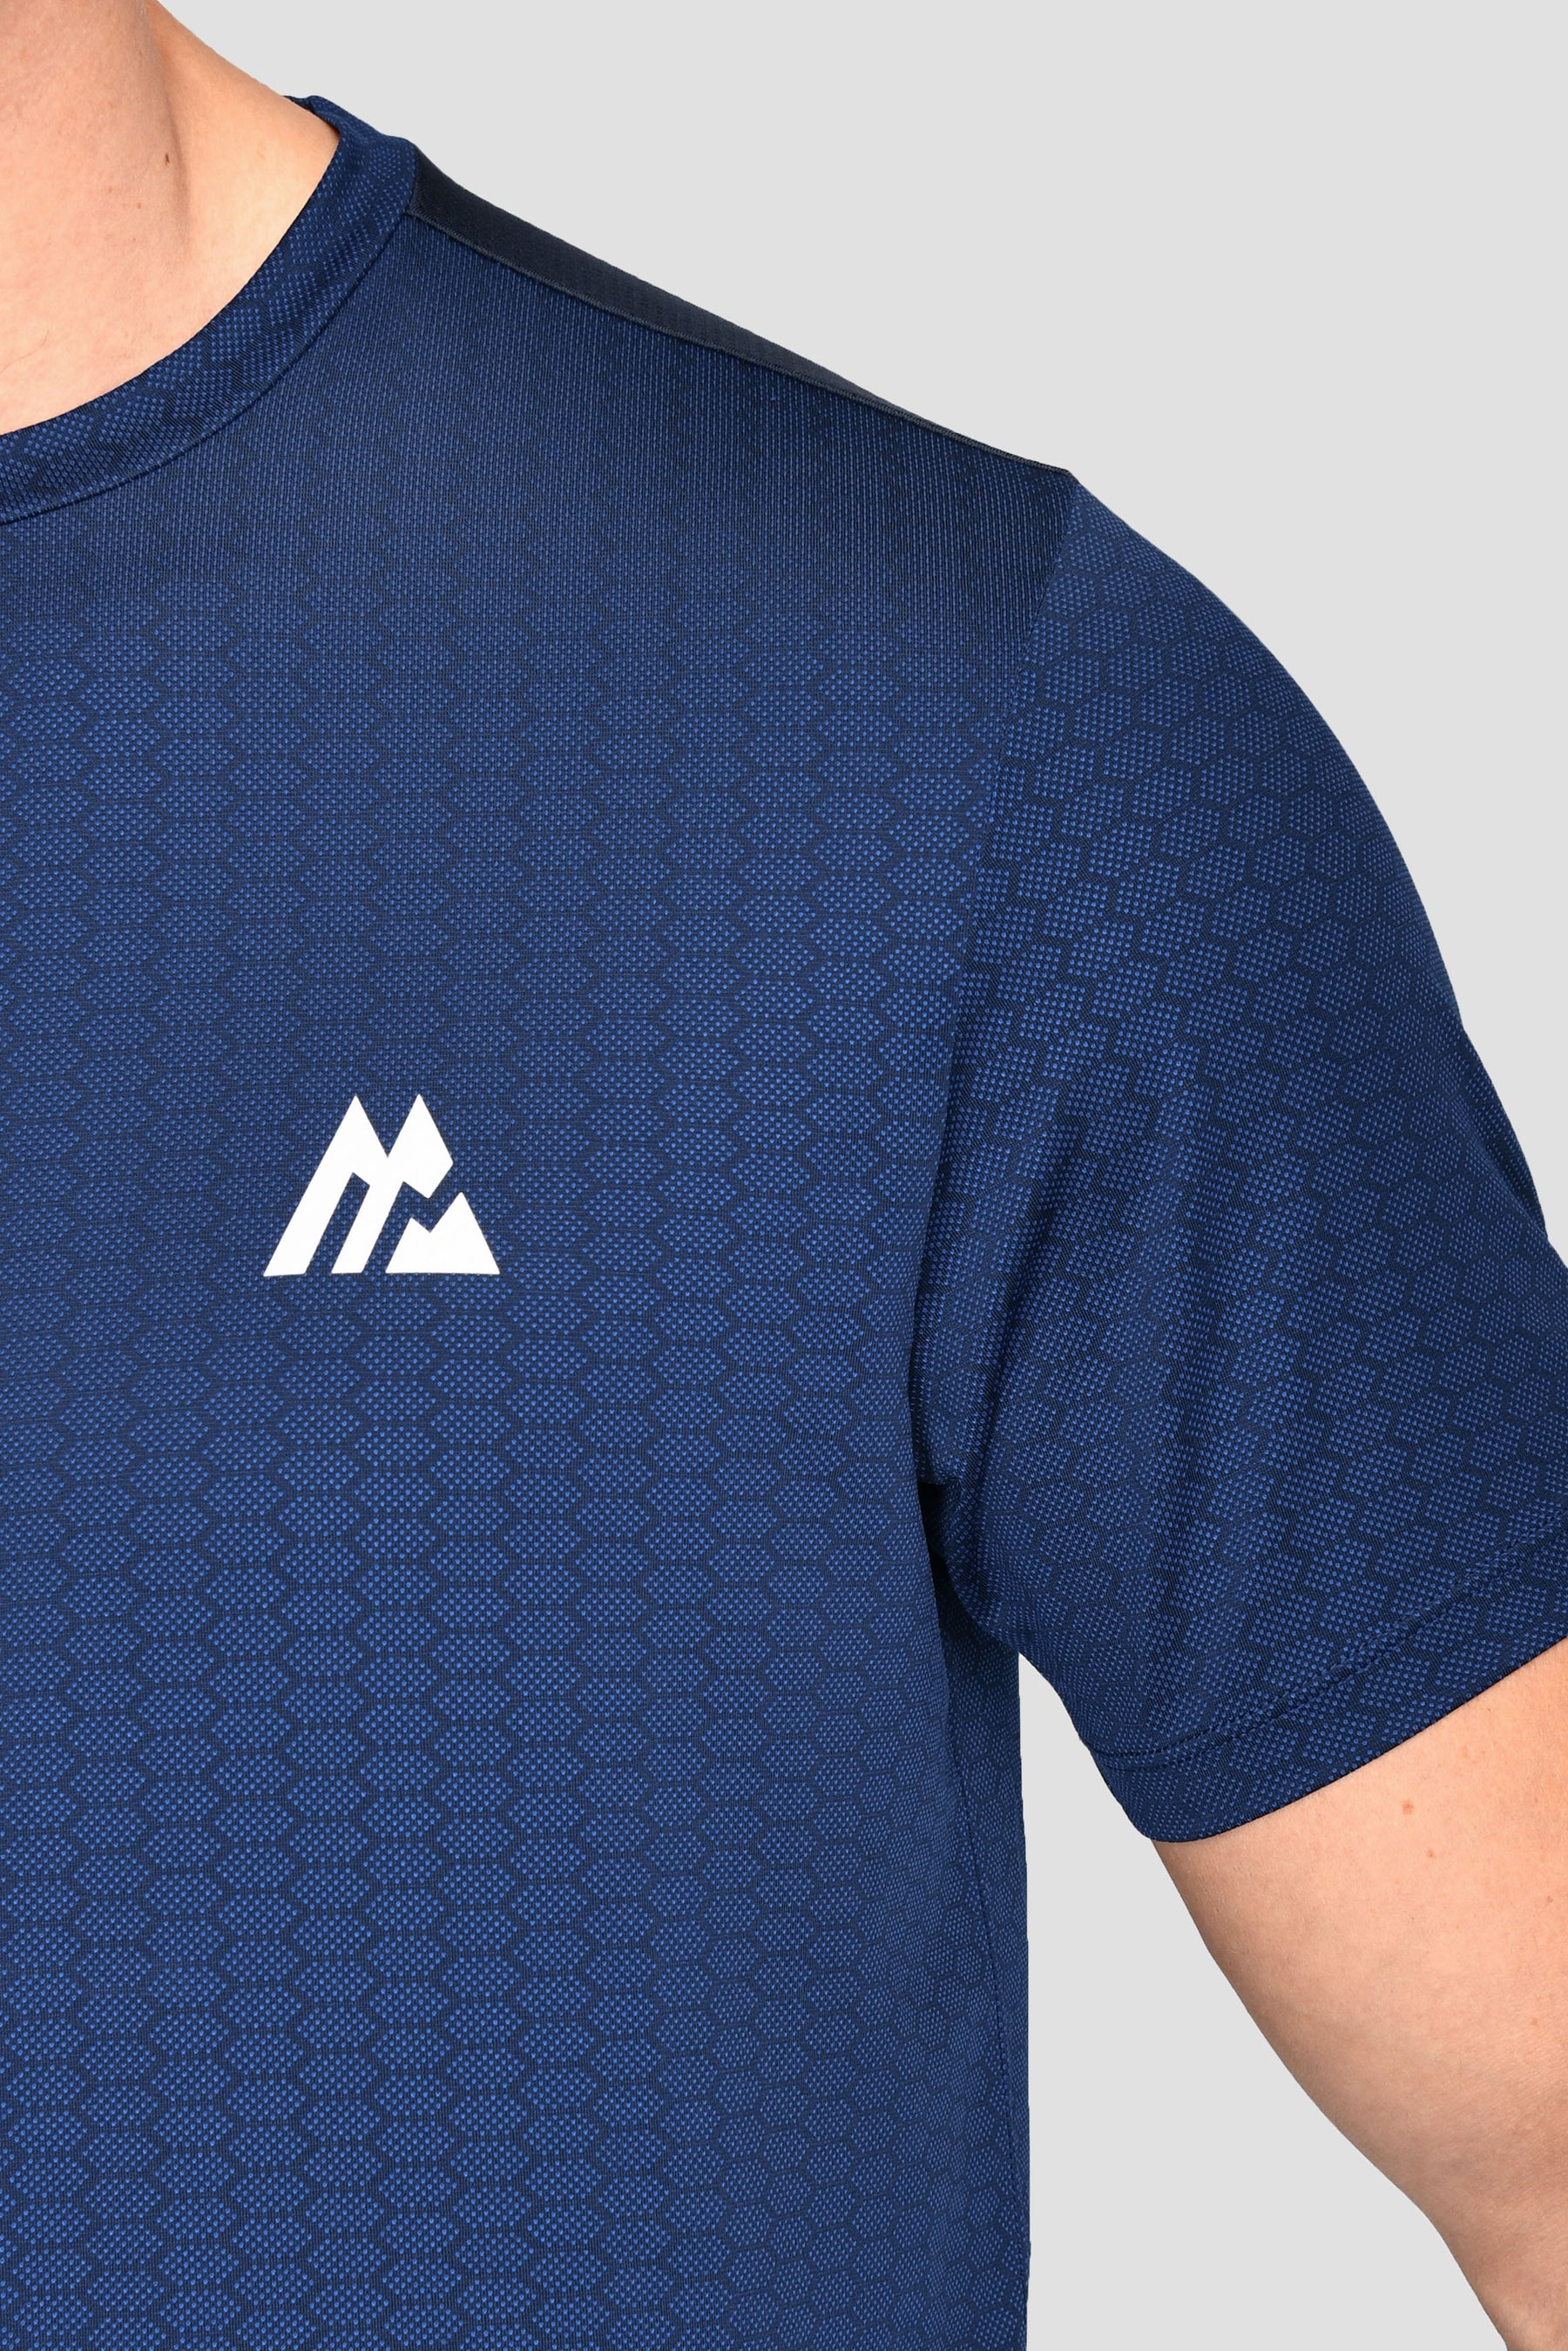 MTX Hex T-Shirt - Marine Blue/Midnight Blue